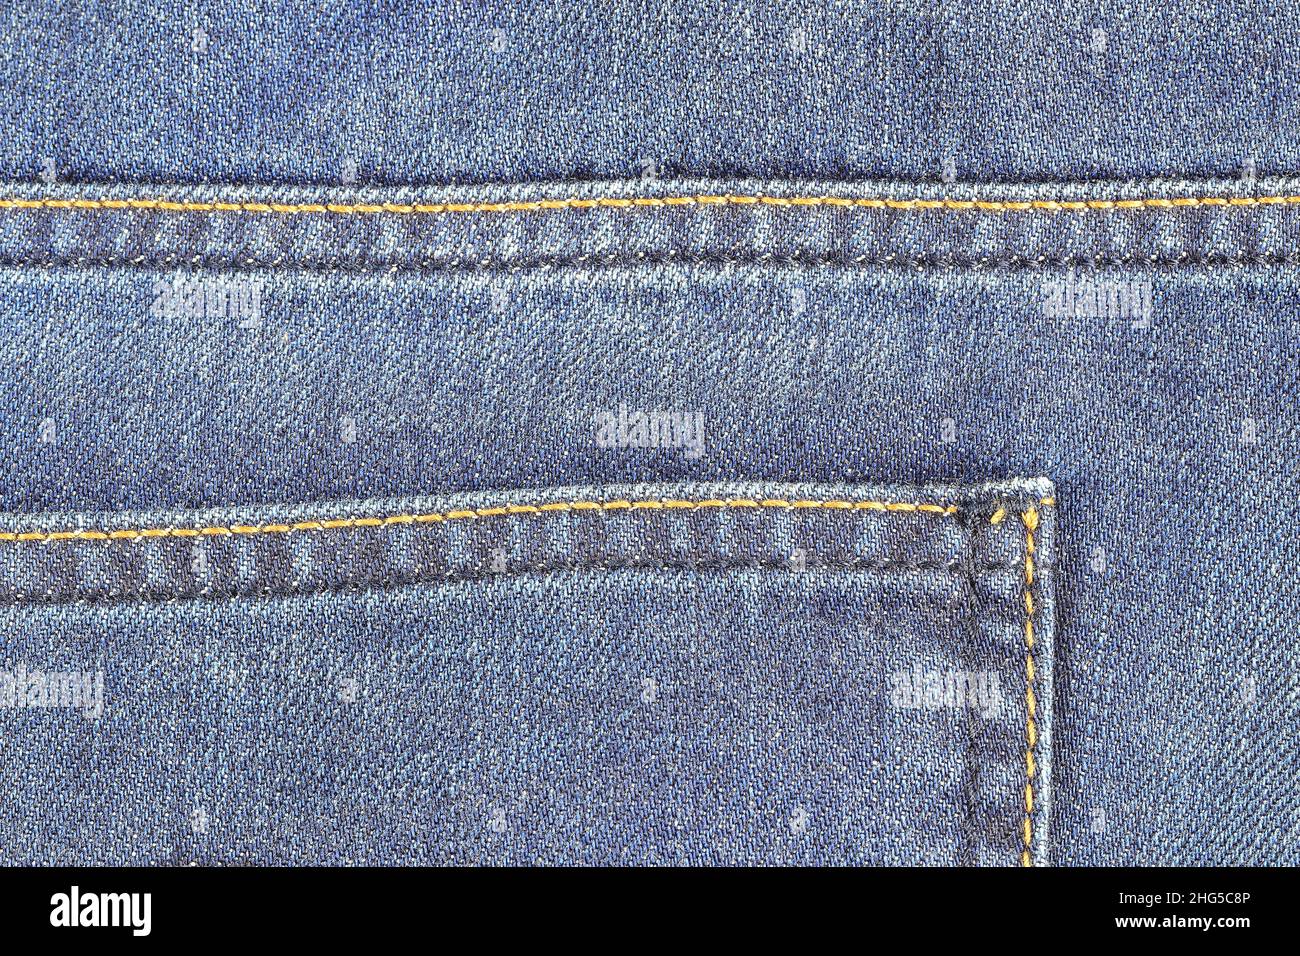 Detail of Back pocket of denim Jeans, Blue Jeans texture vintage background. Stock Photo